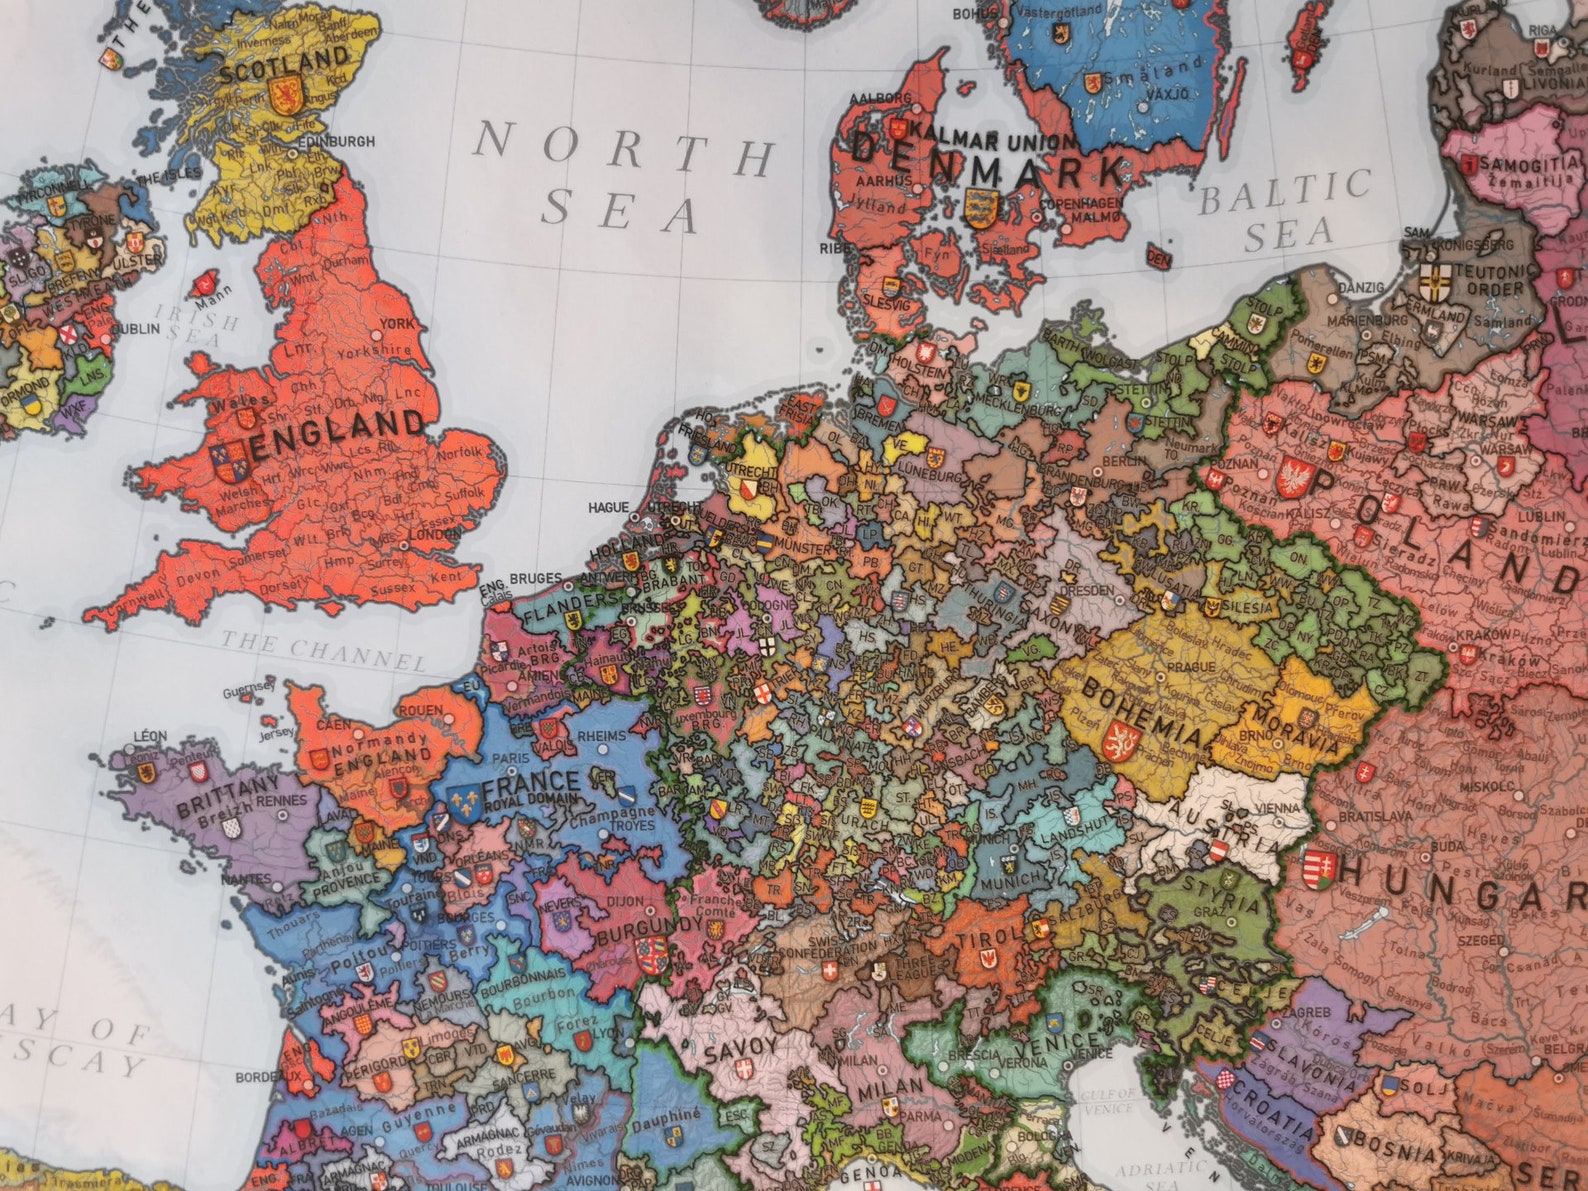 Europe 1444 History Map Etsy